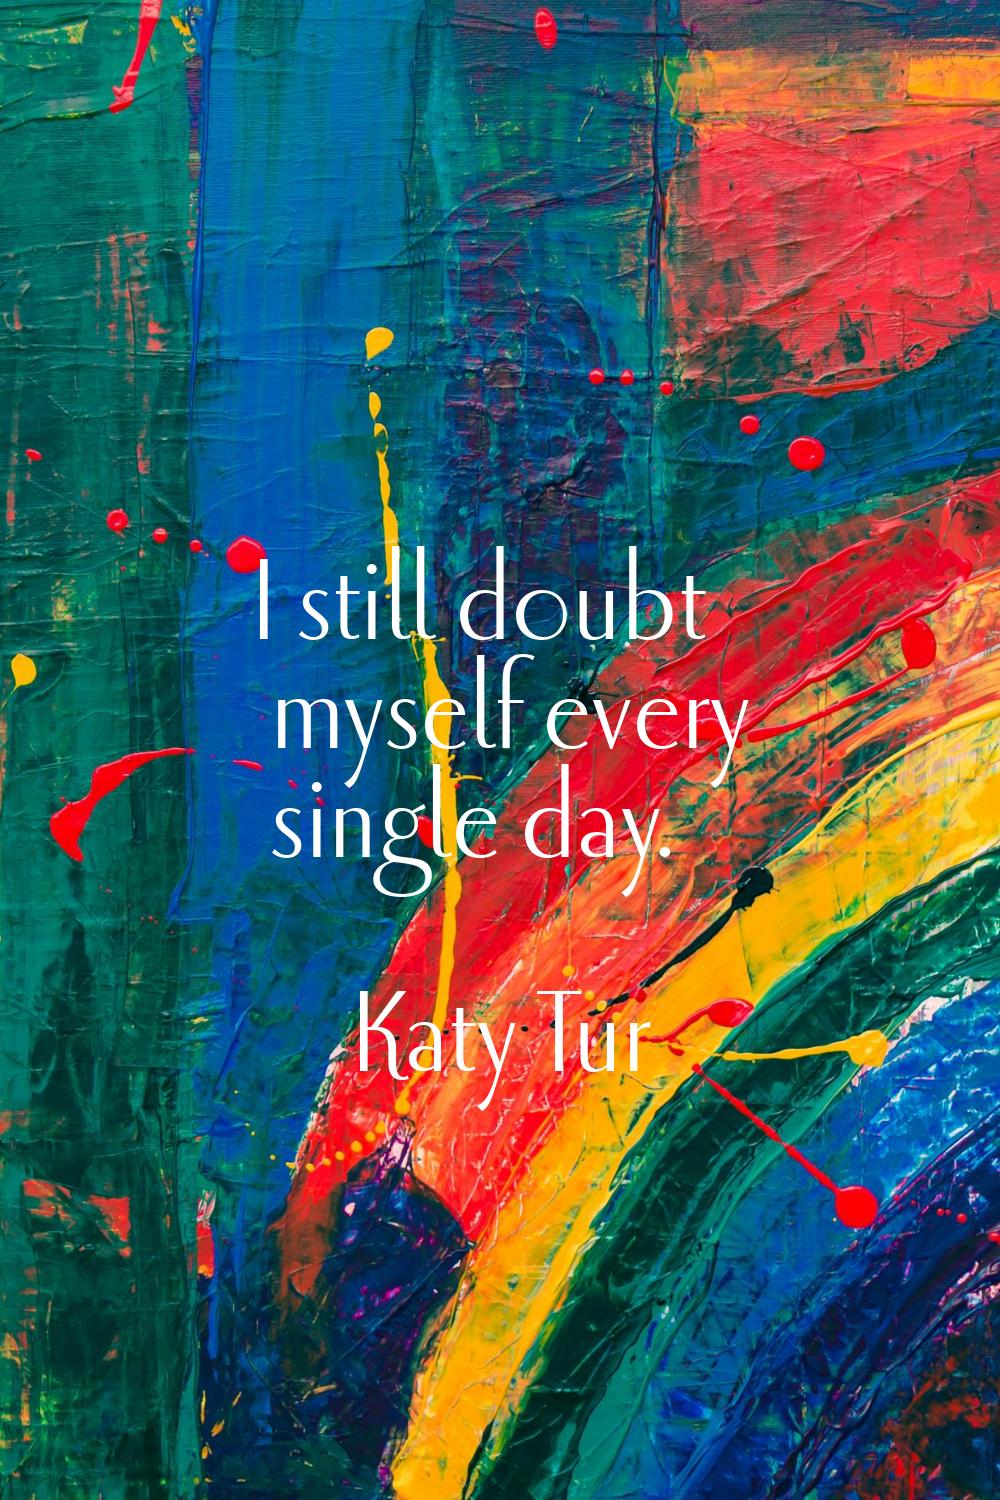 I still doubt myself every single day.